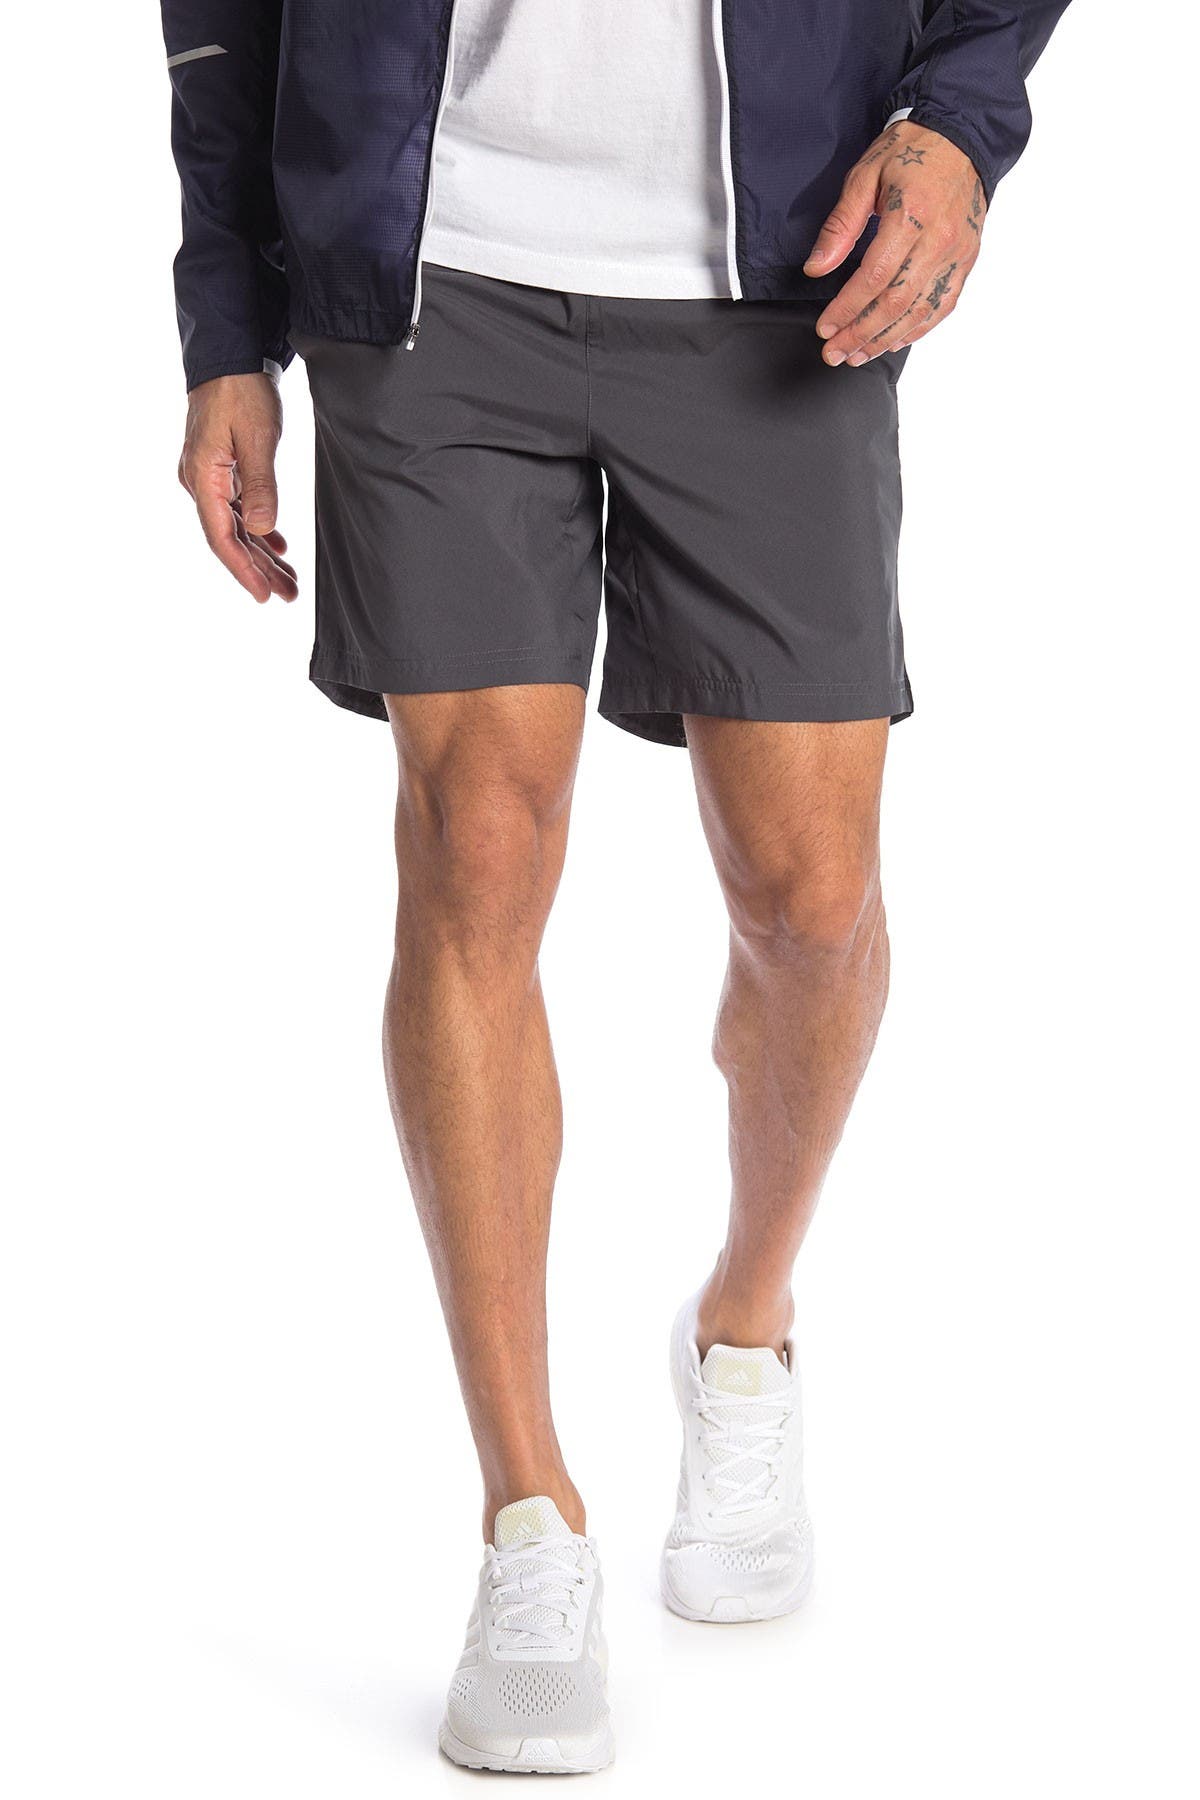 adidas mens running shorts 5 inch inseam